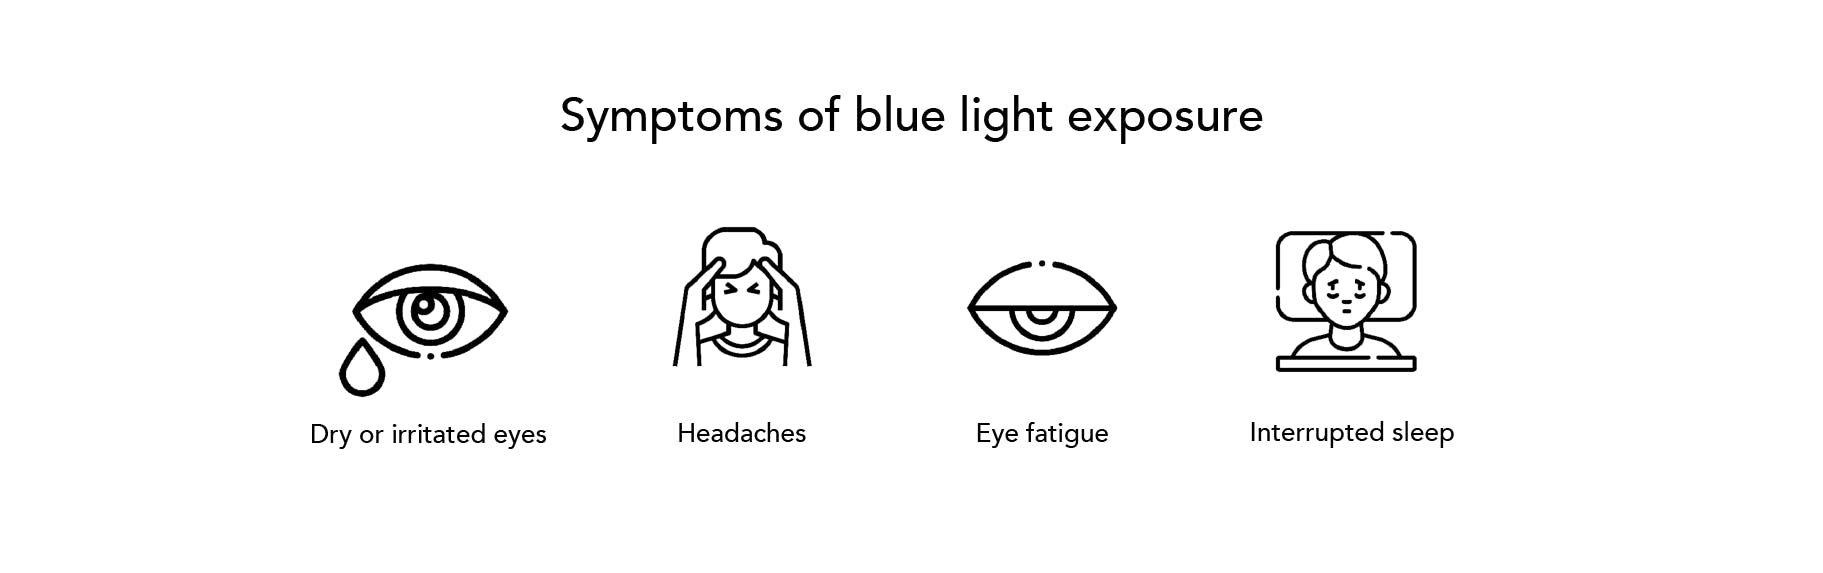 Symptoms of Blue Light